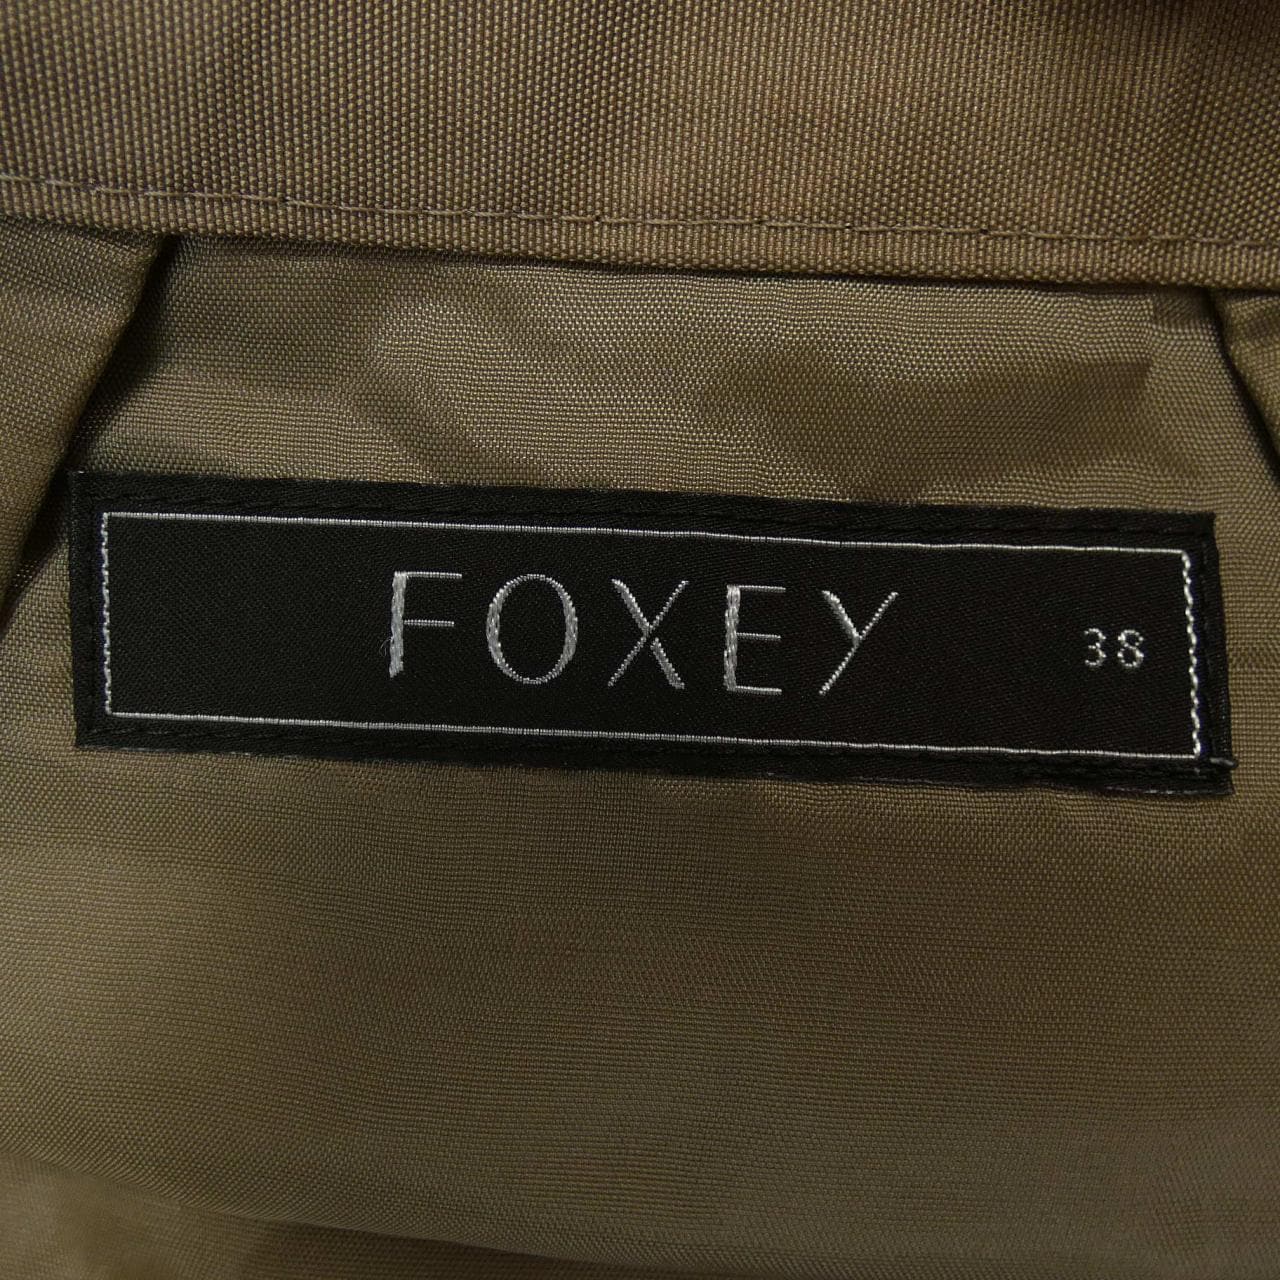 Foxy FOXEY skirt